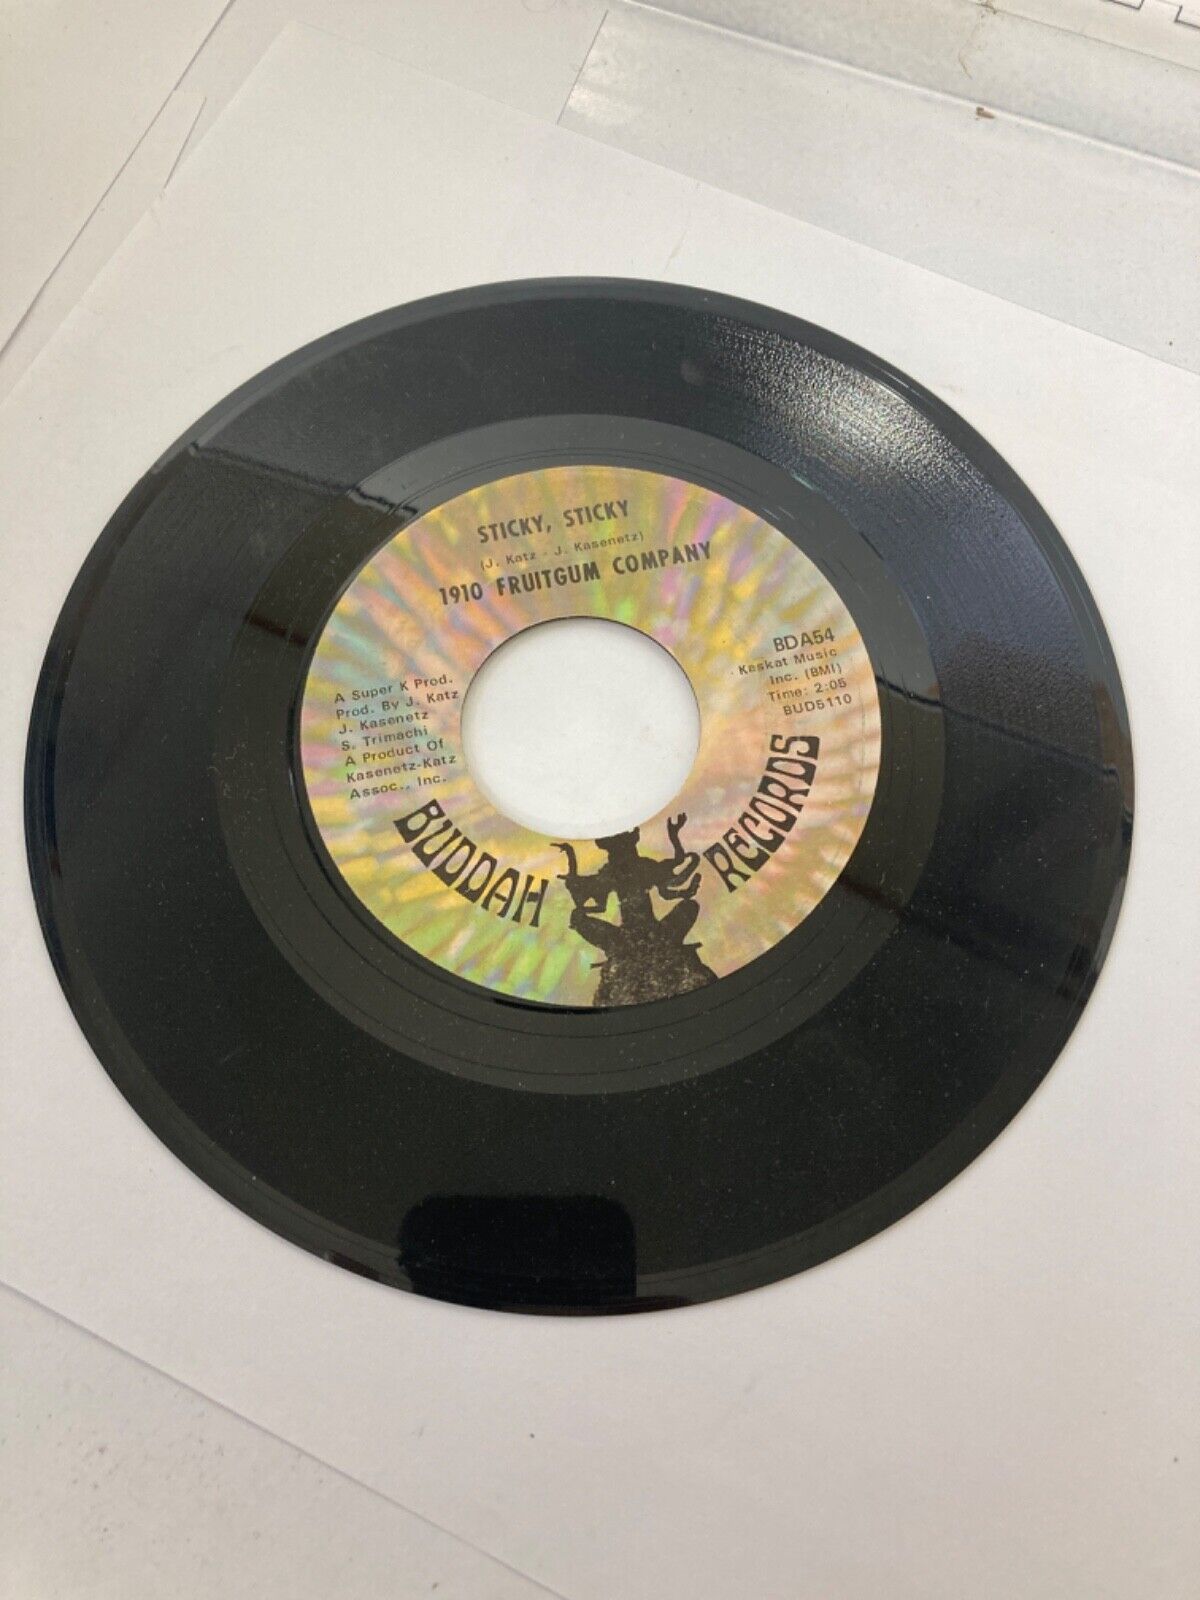 1910 FRUITGUM COMPANY 7"-45 RPM Vinyl Record Buddah BDA 54 1968 Sticky/Red Light